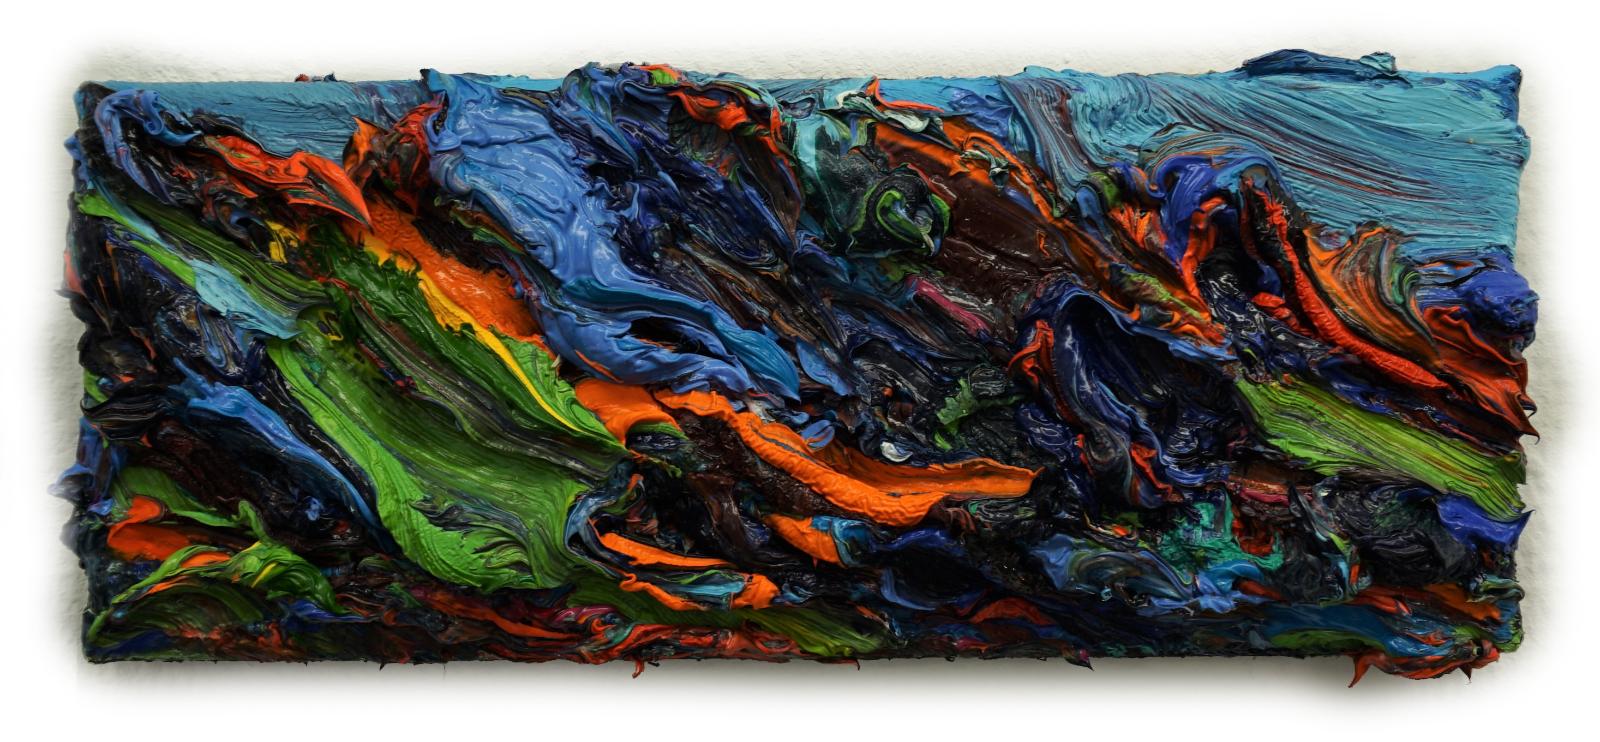 Harry Meyer, Land, 2019, Öl auf Leinwand, 10 x 25 cm, meh015ko